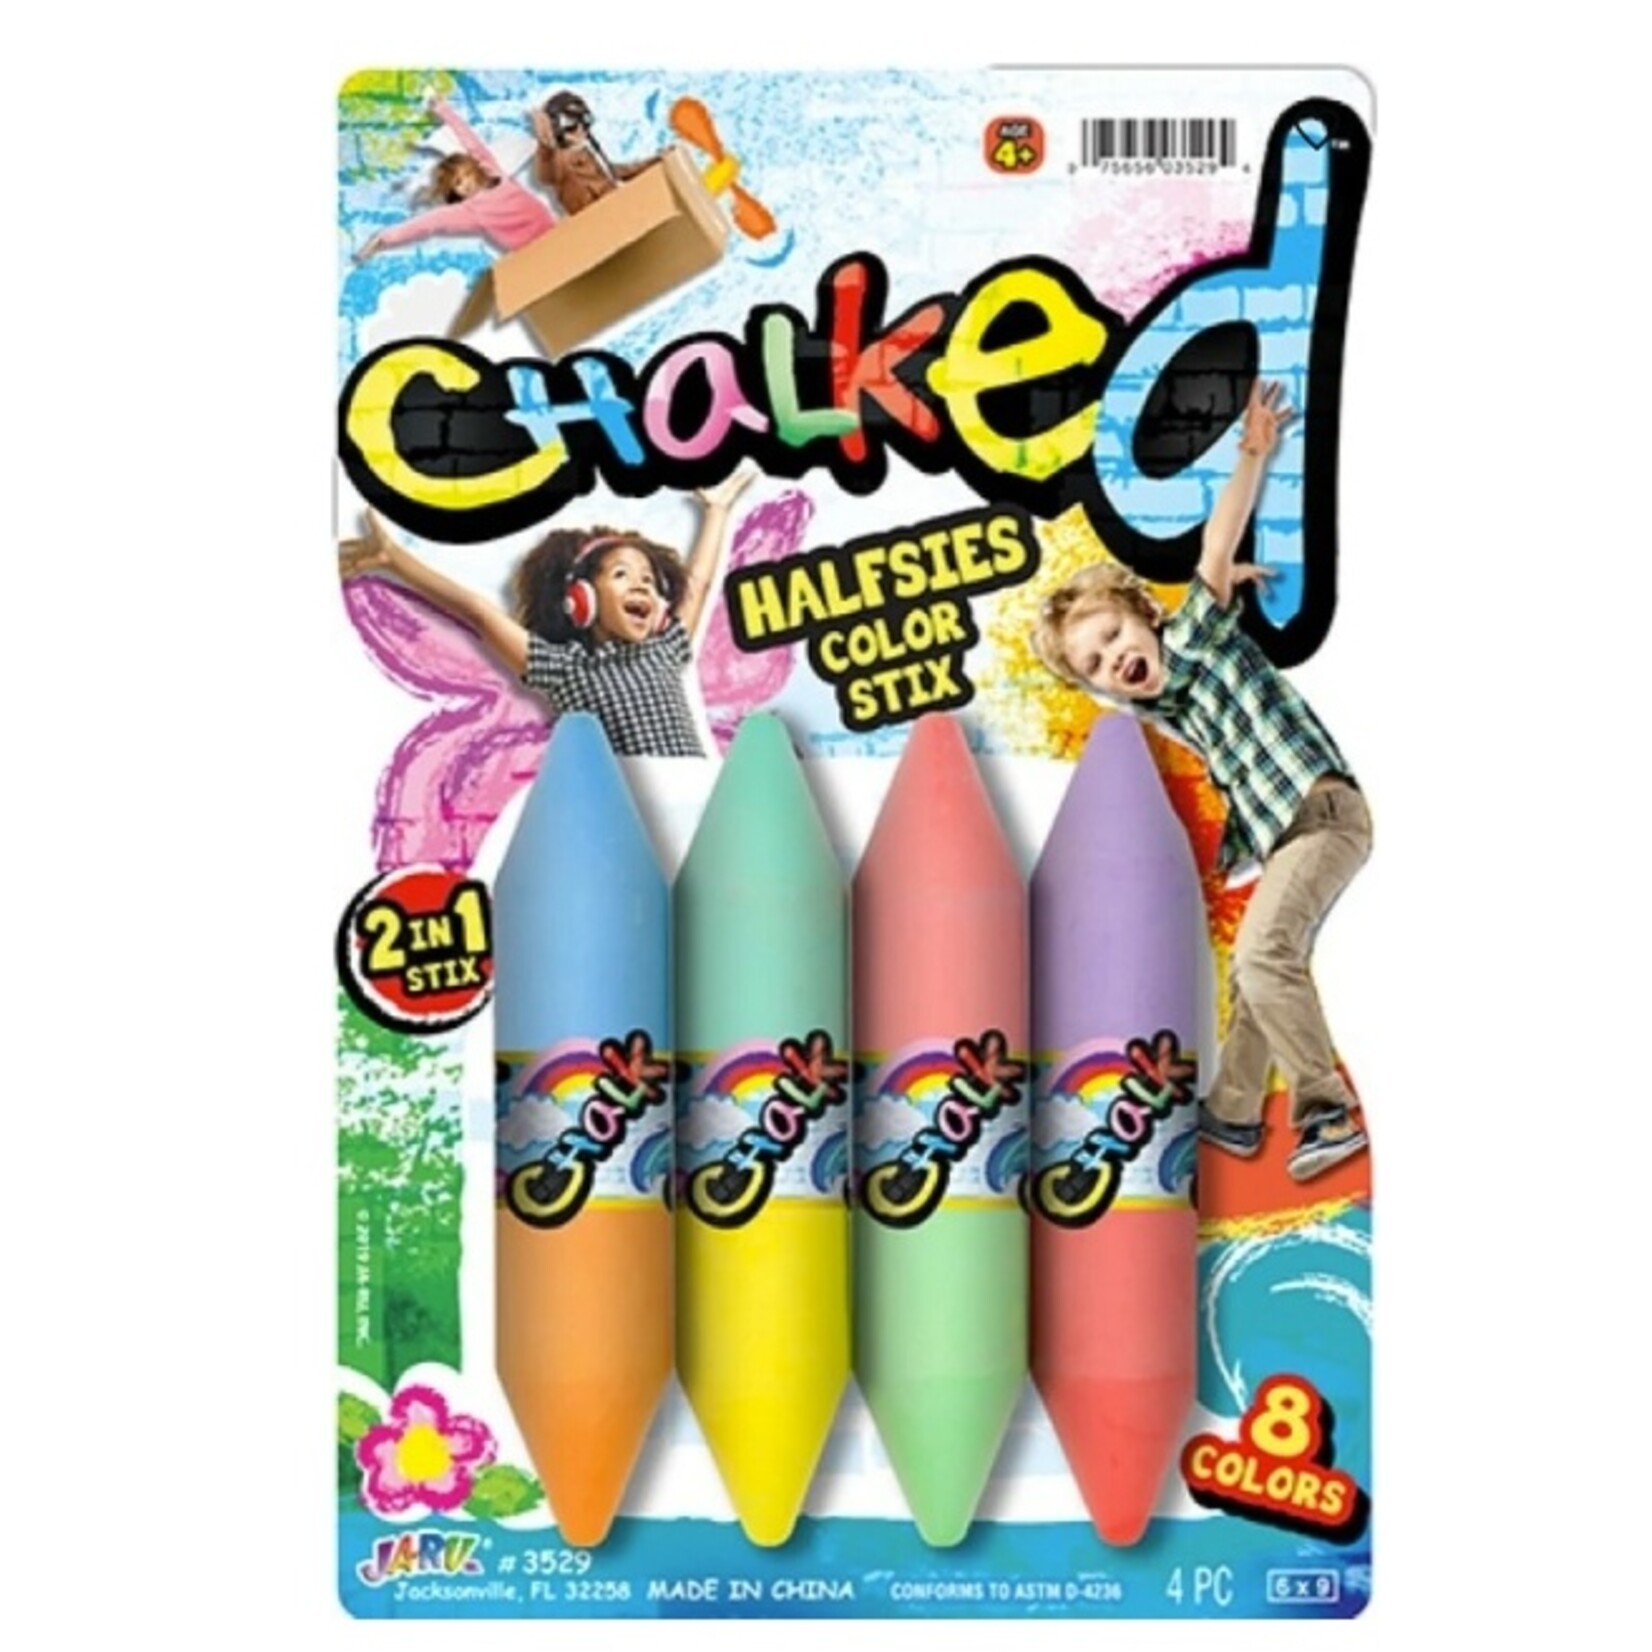 Wet Products Chalk Halfsies Color Stix